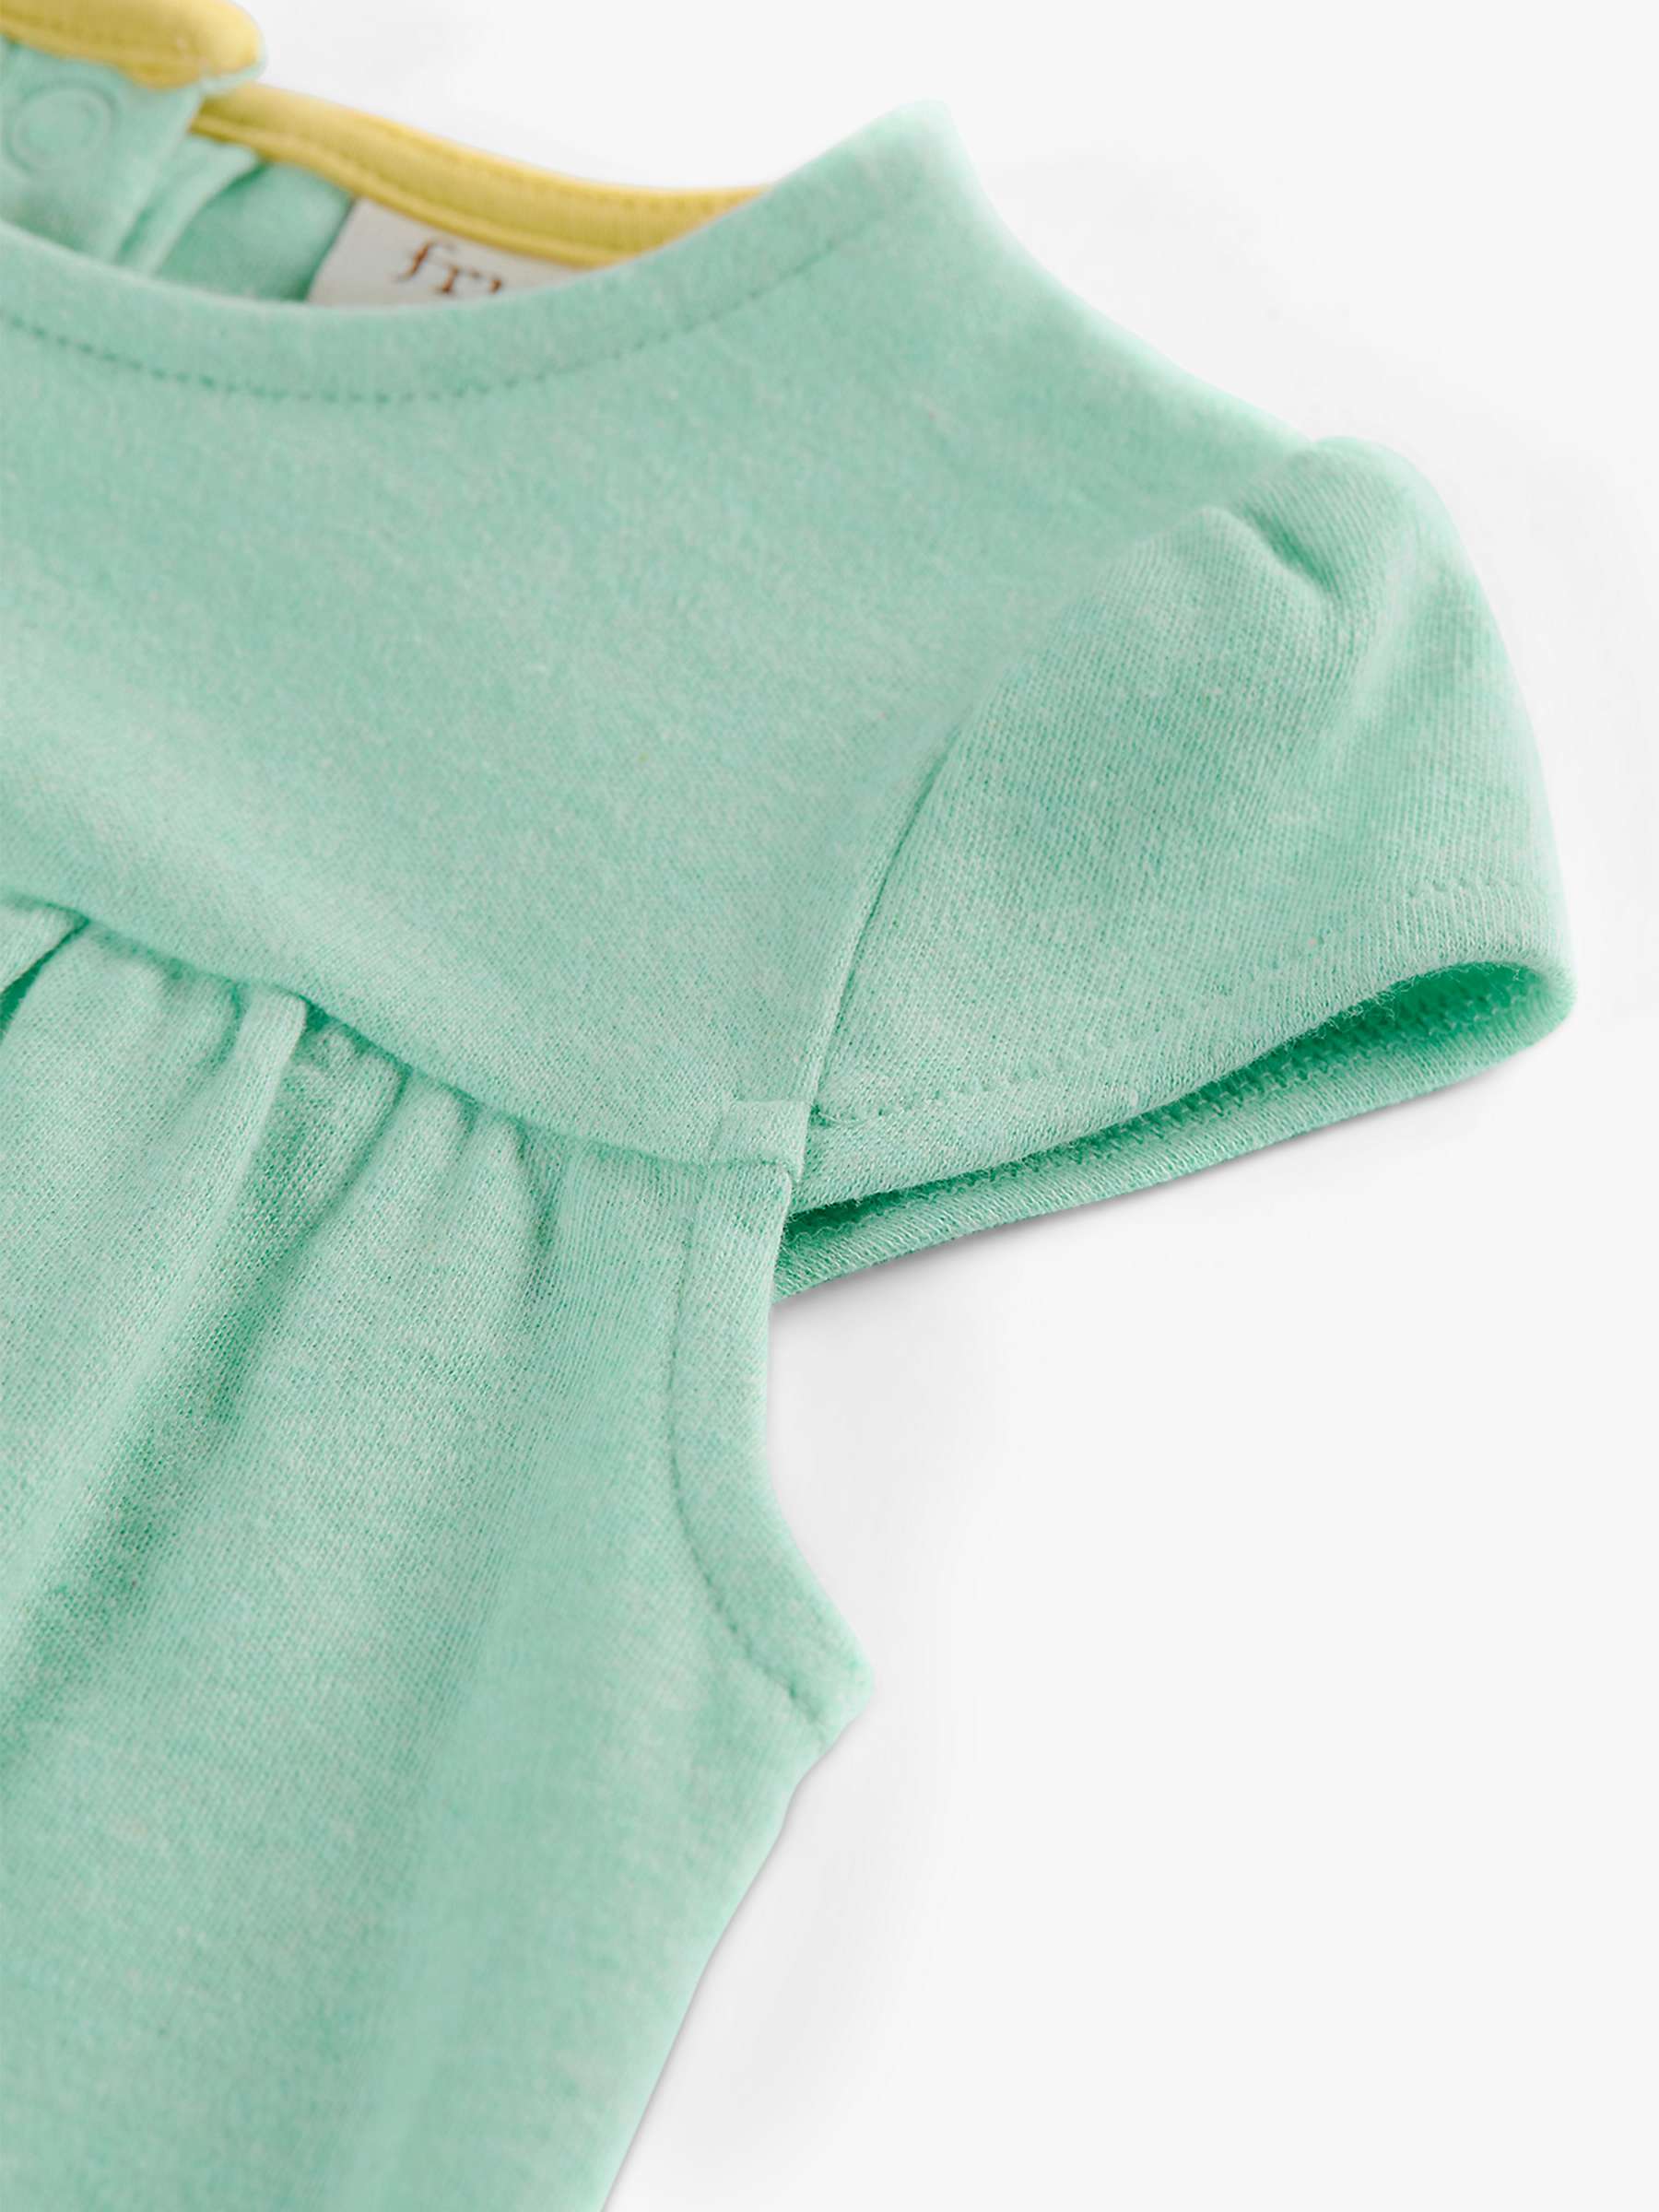 Buy Frugi Baby Organic Cotton Little Layla Applique Dress Online at johnlewis.com